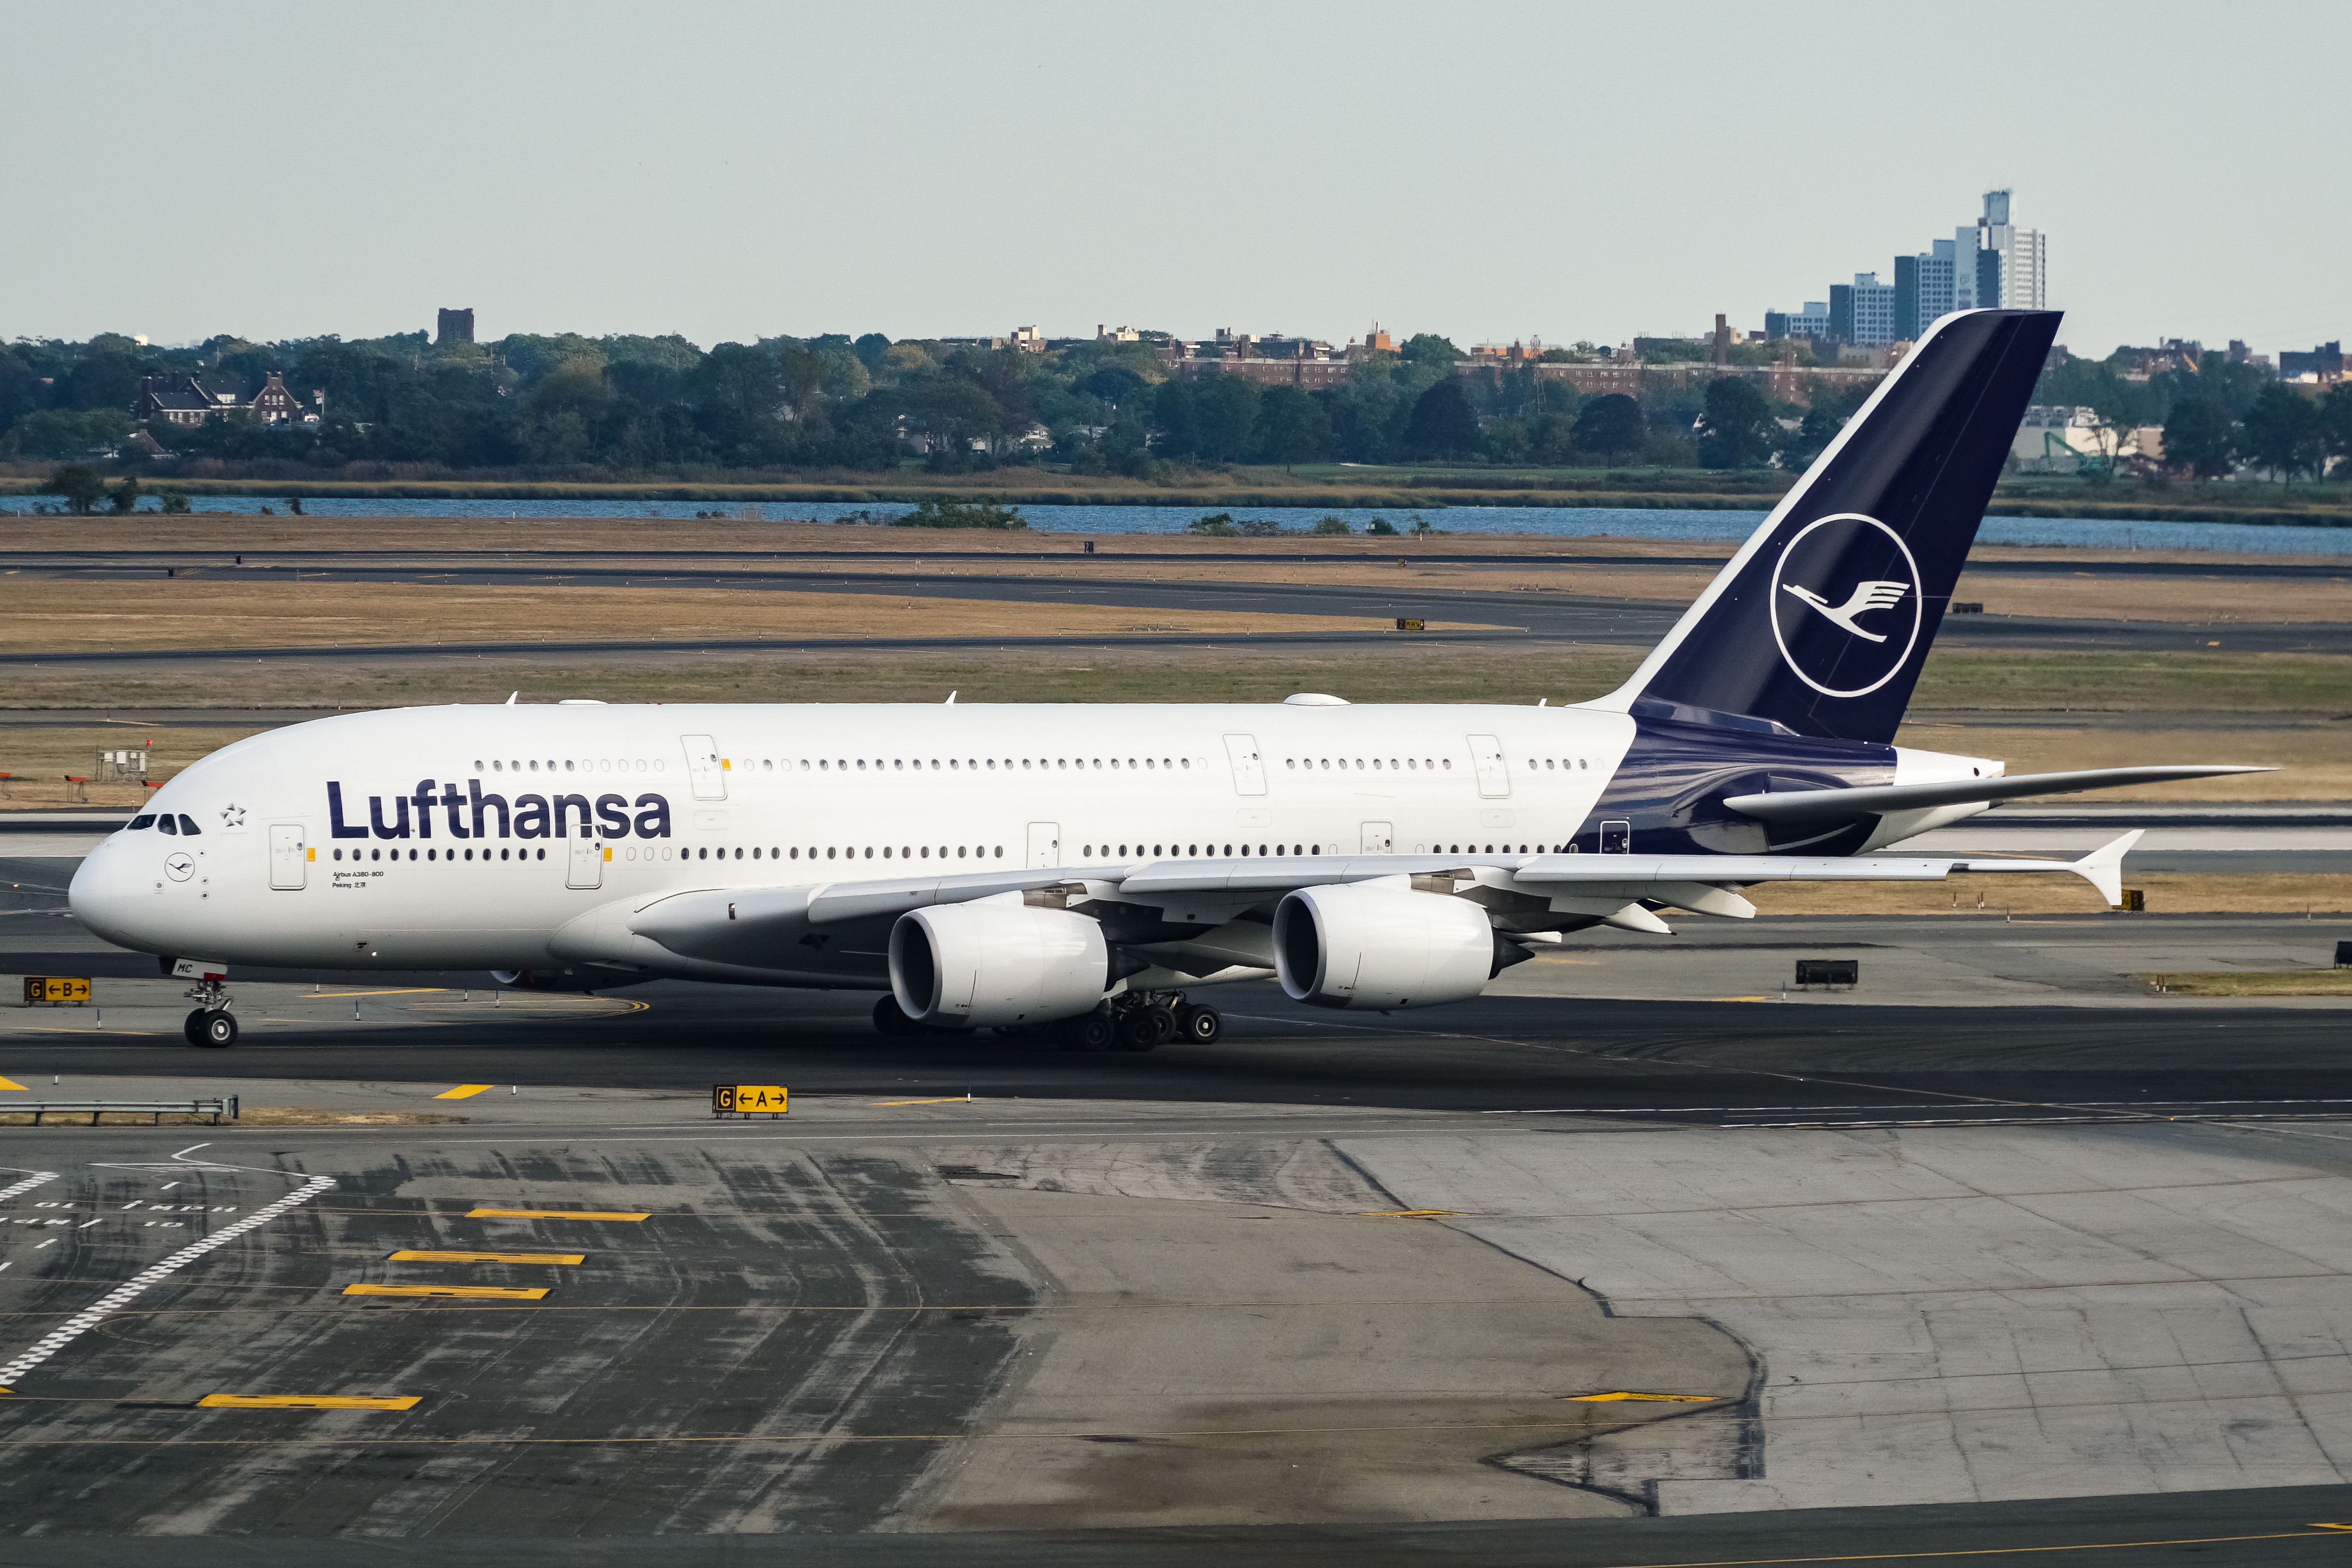 Lufthansa Airbus A380 taxiing at New York John F. Kennedy International Airport JFK shutterstock_1527627296